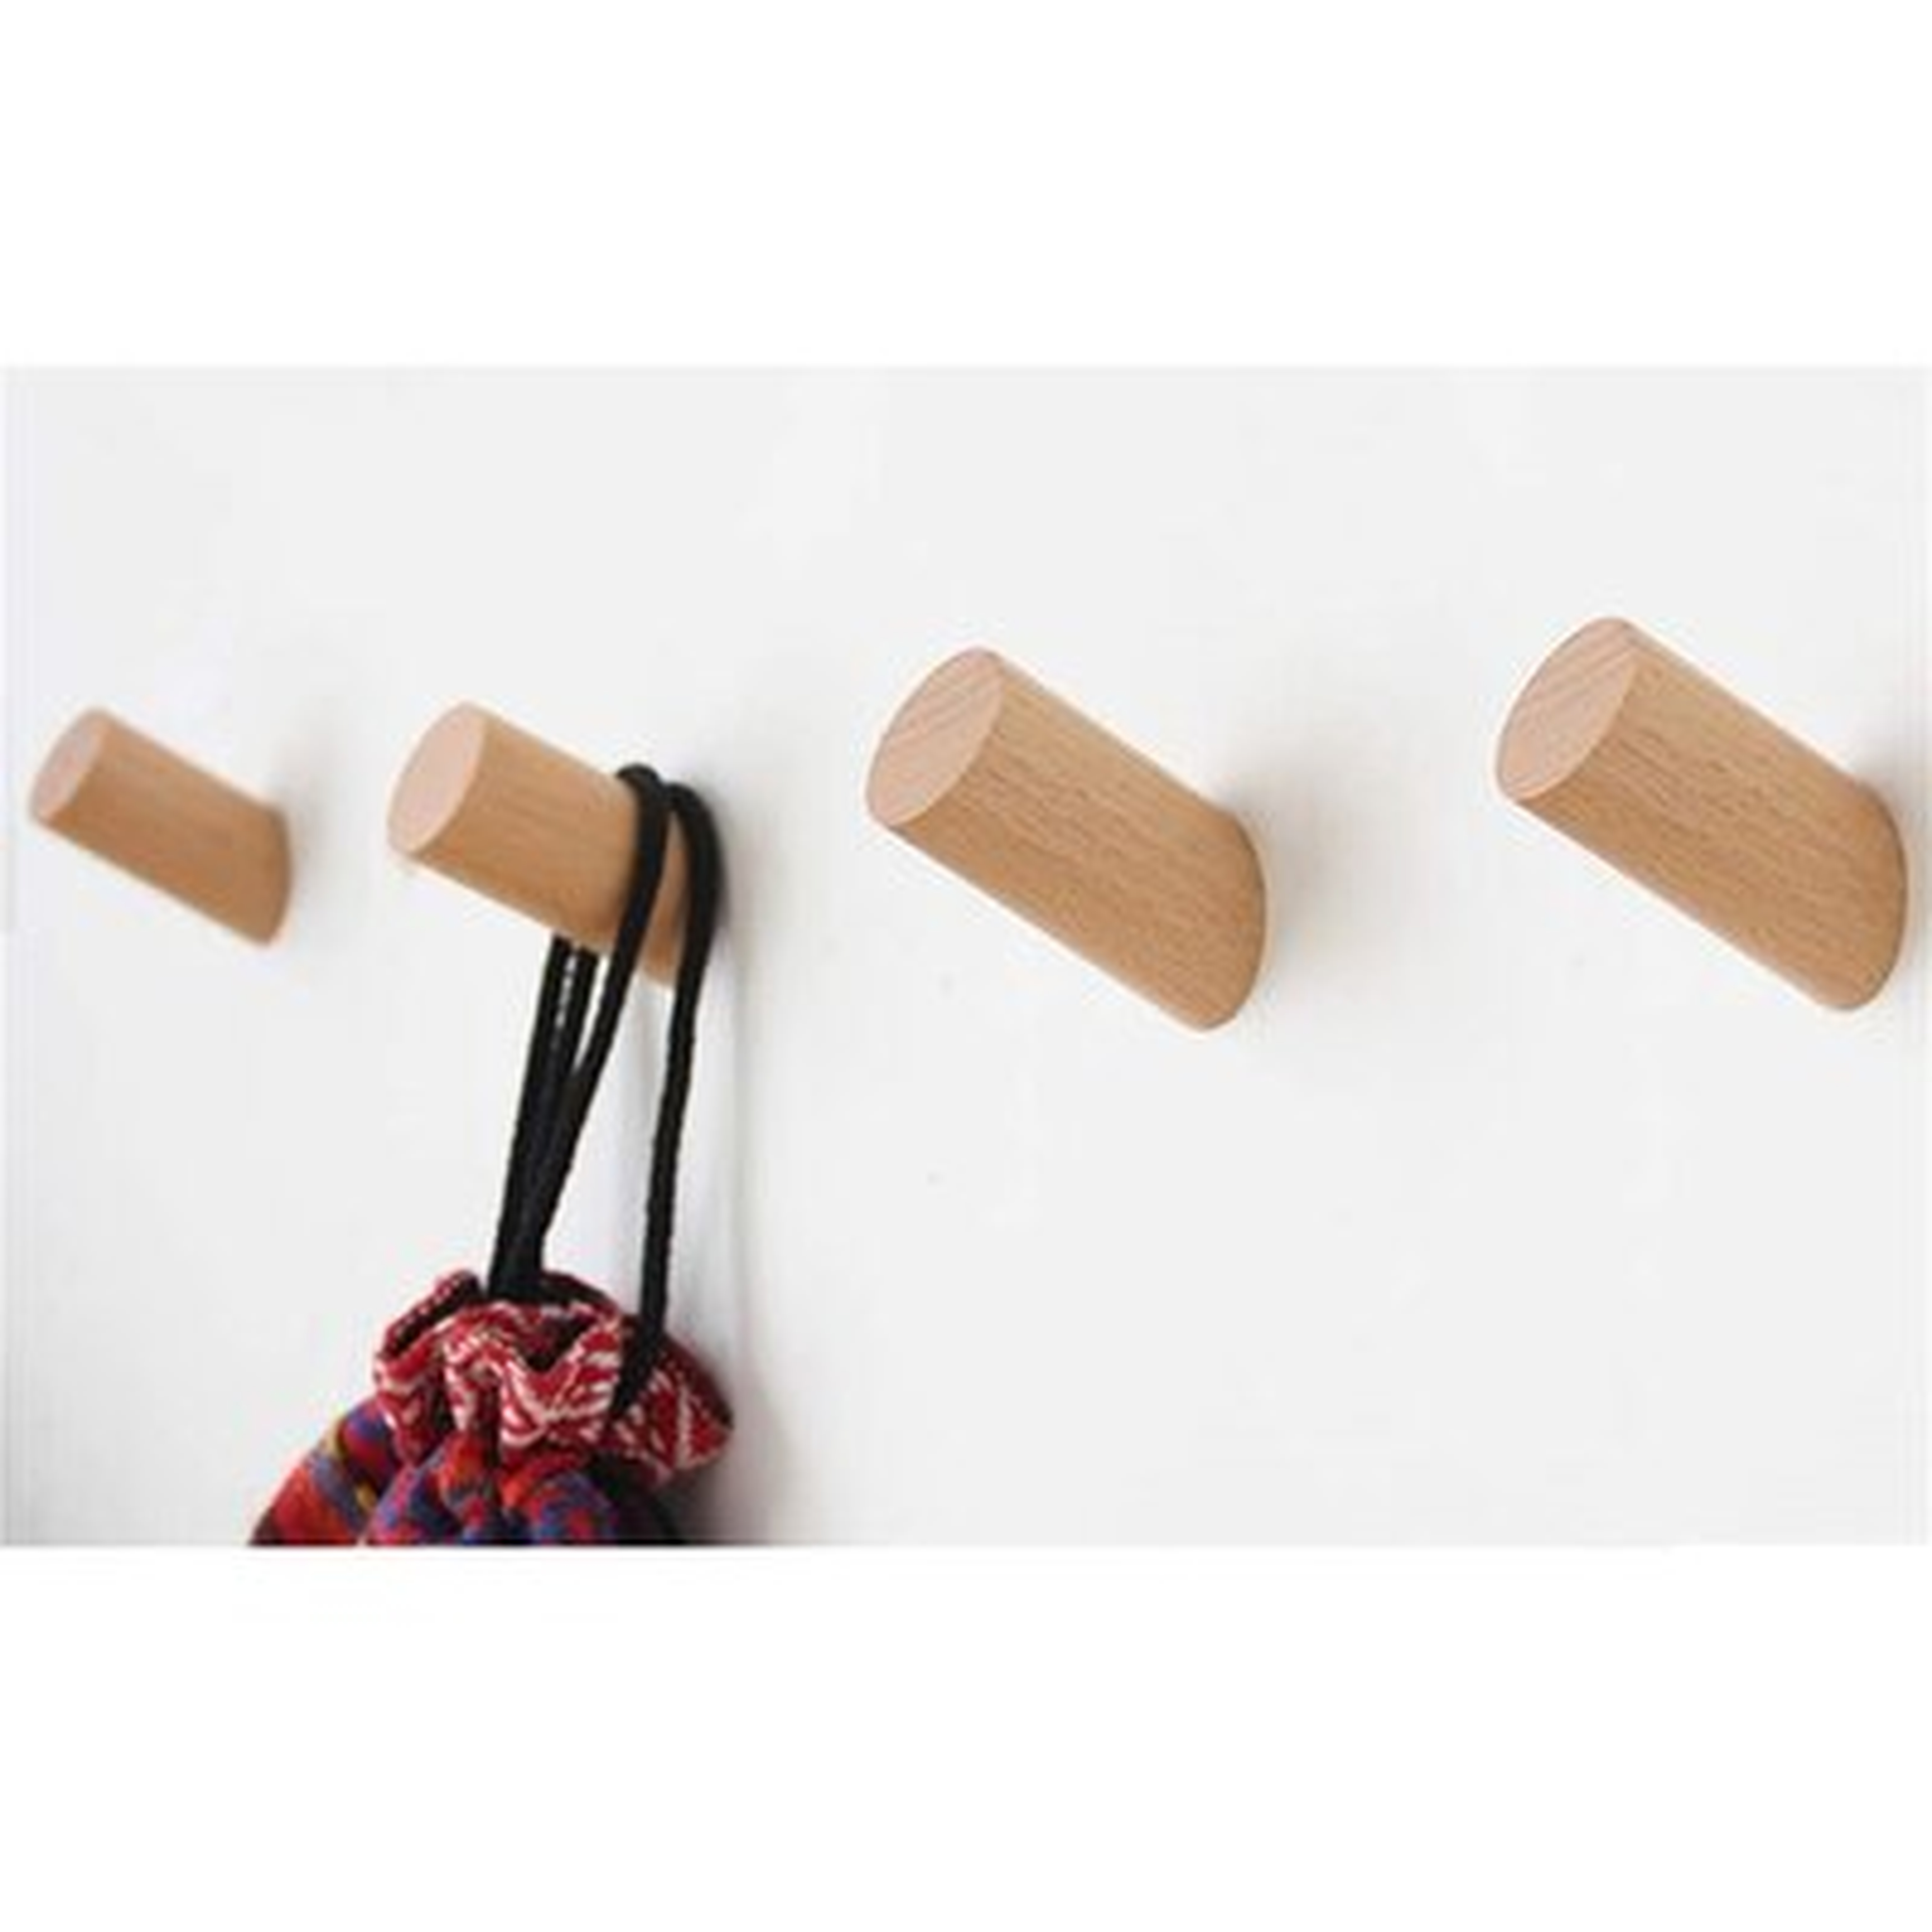 Wood Wall Hooks, 4 Pack Coat Hooks Wall Mounted |  Rustic Wooden Hooks Heavy Duty Robe Hook Hat Rack | Hooks For Hanging Bathroom Towels Clothes Hanger Beech Wood - Wayfair